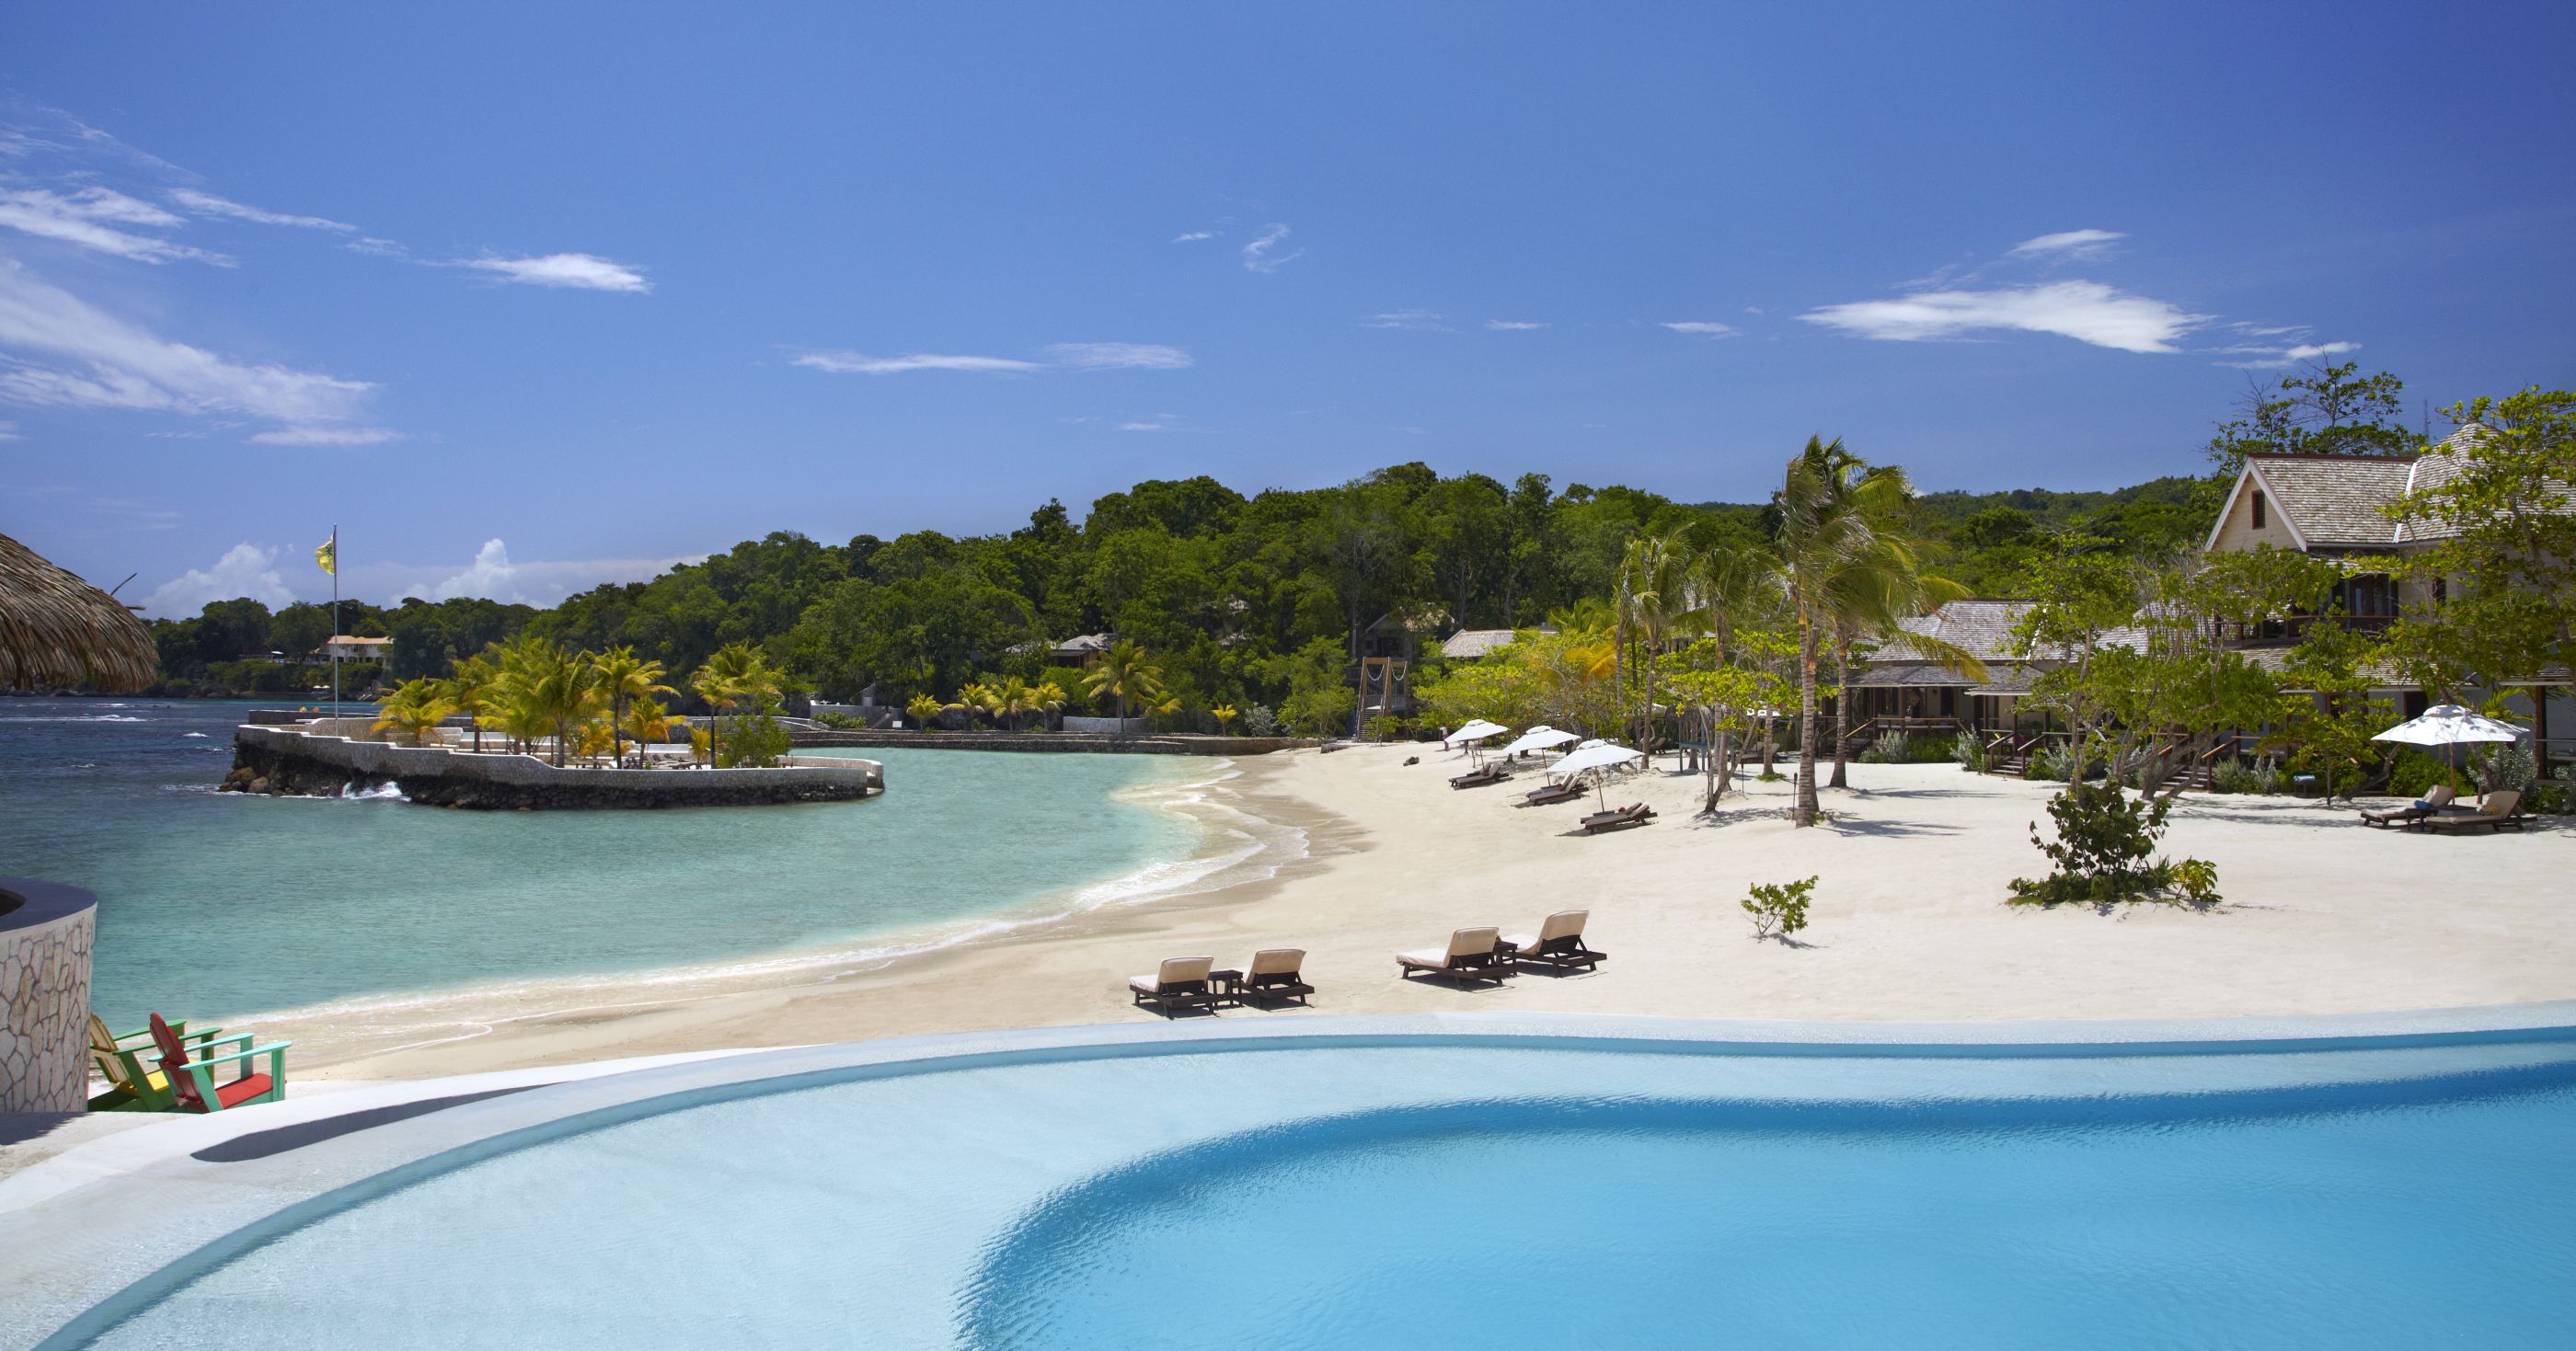 swimming pool and beach at goldeneye in jamaica